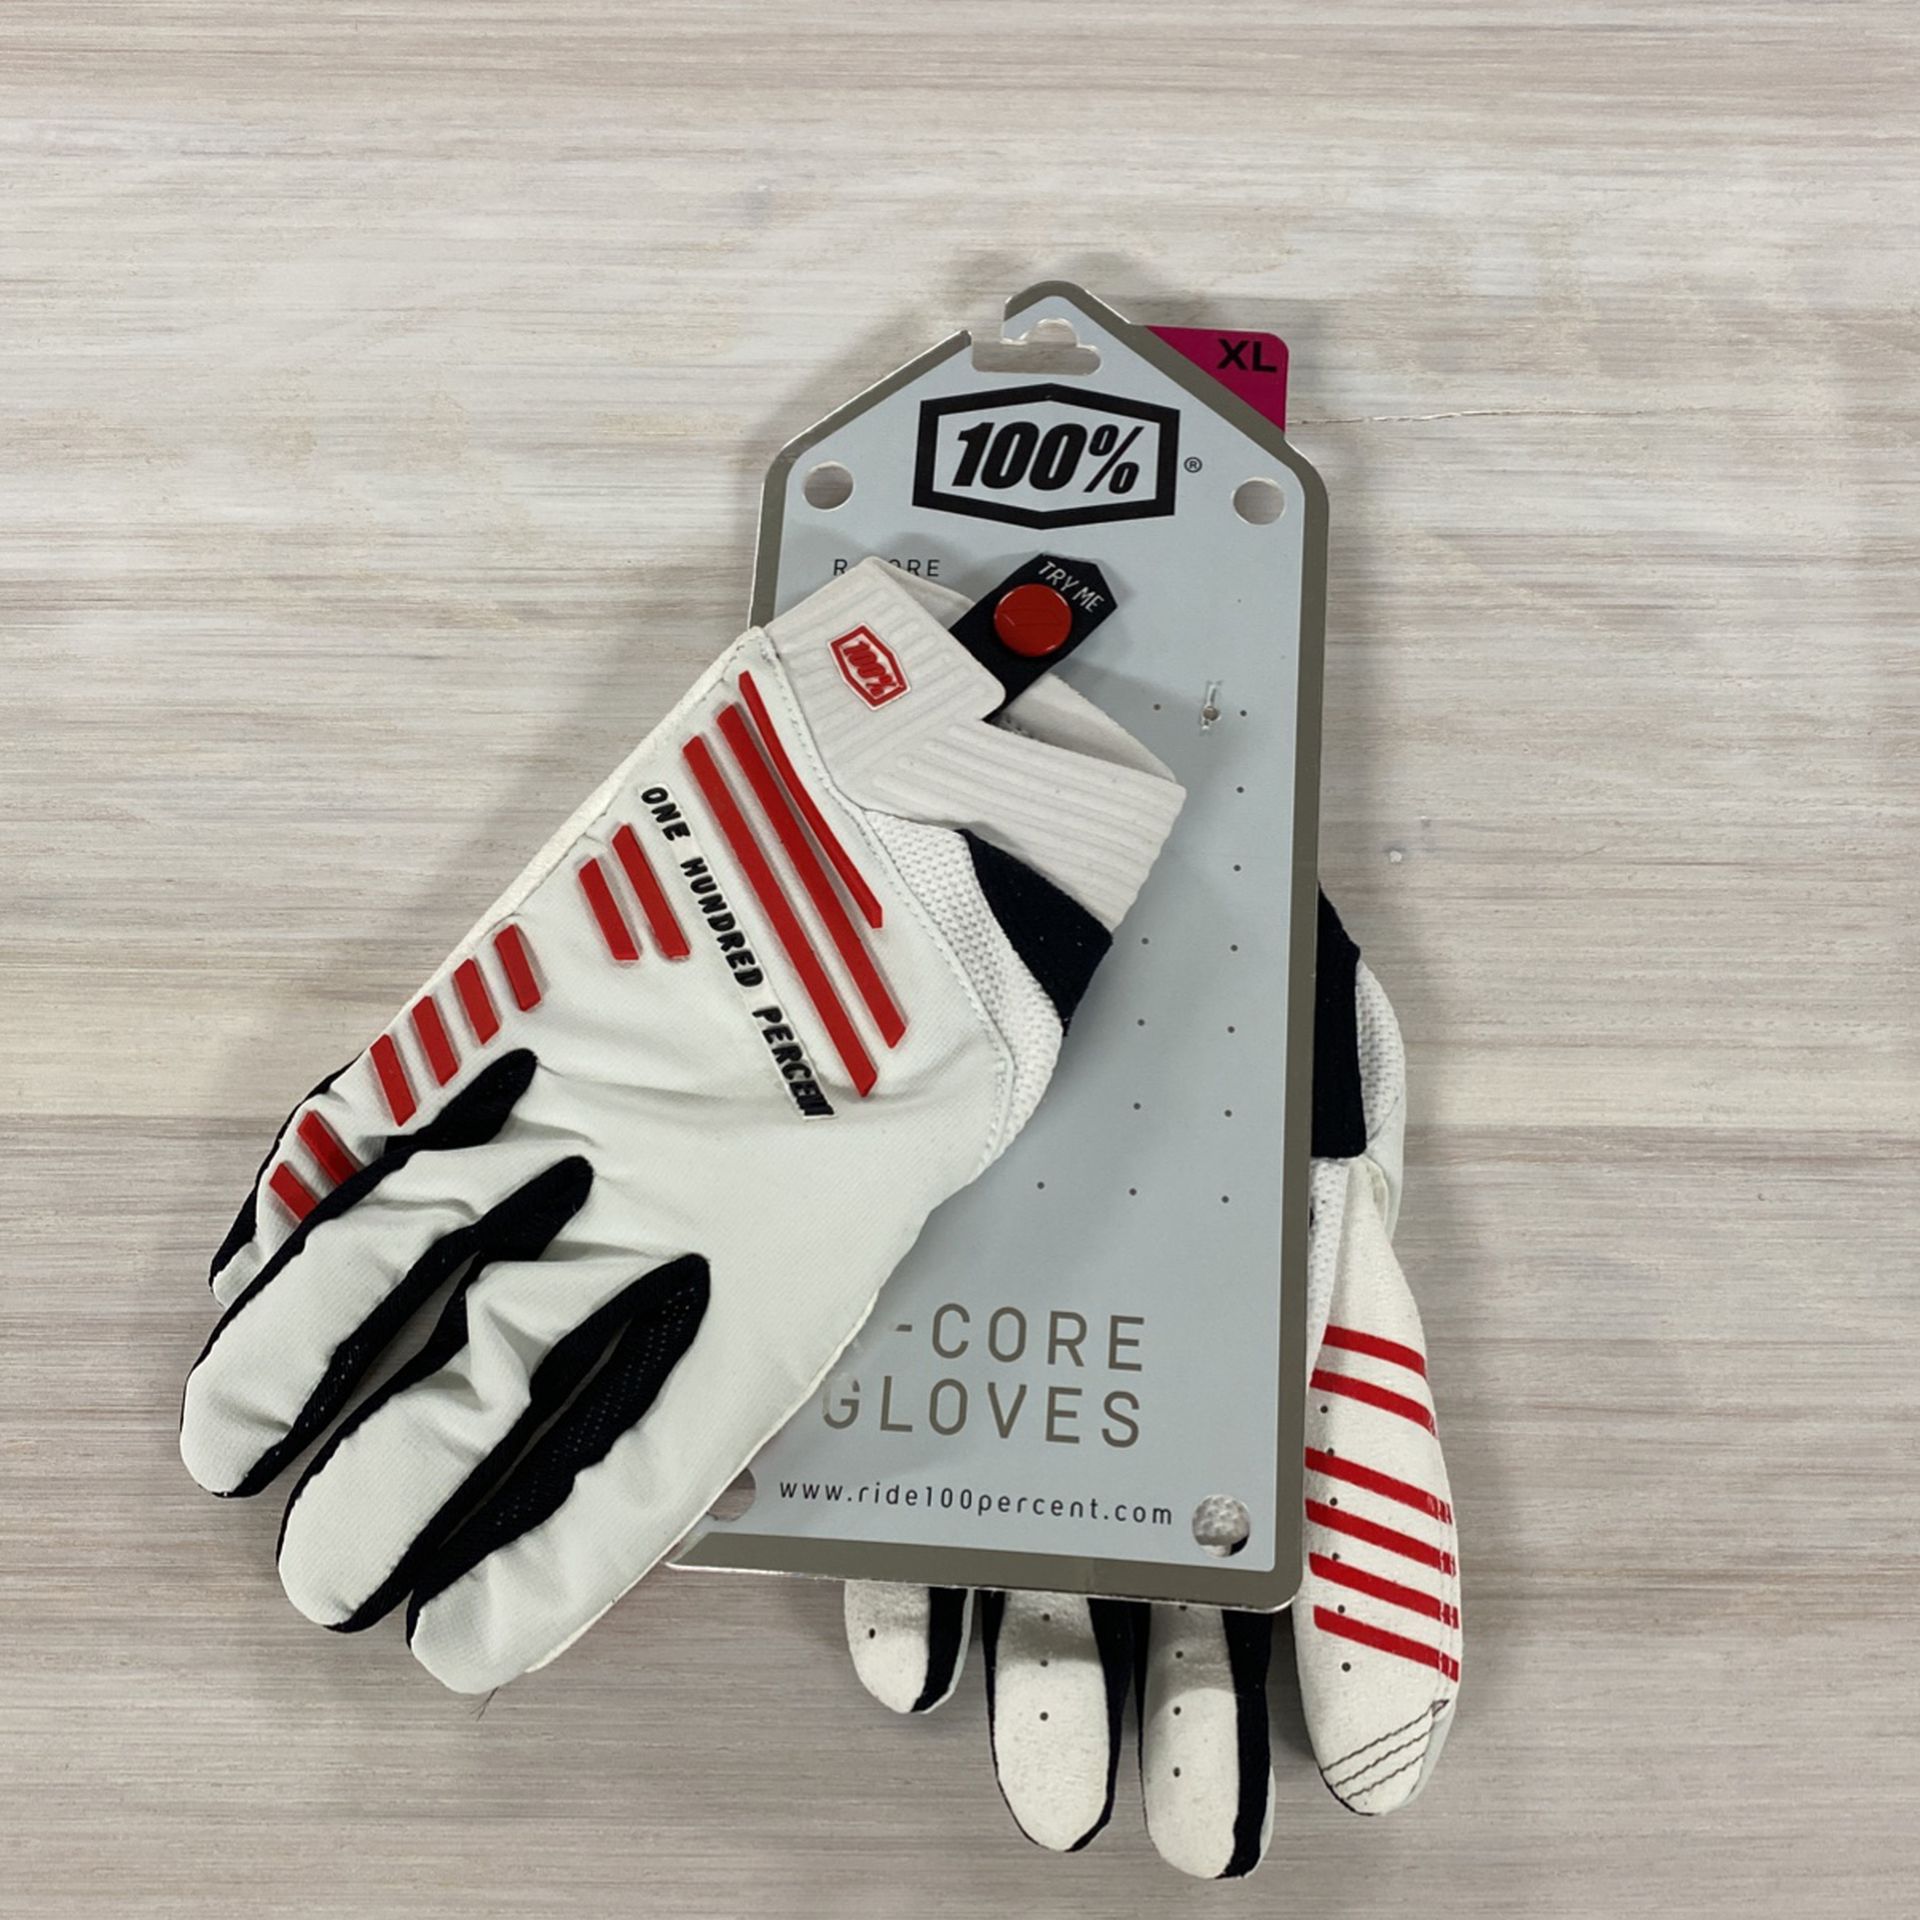 100% R-core Gloves XL Brand New